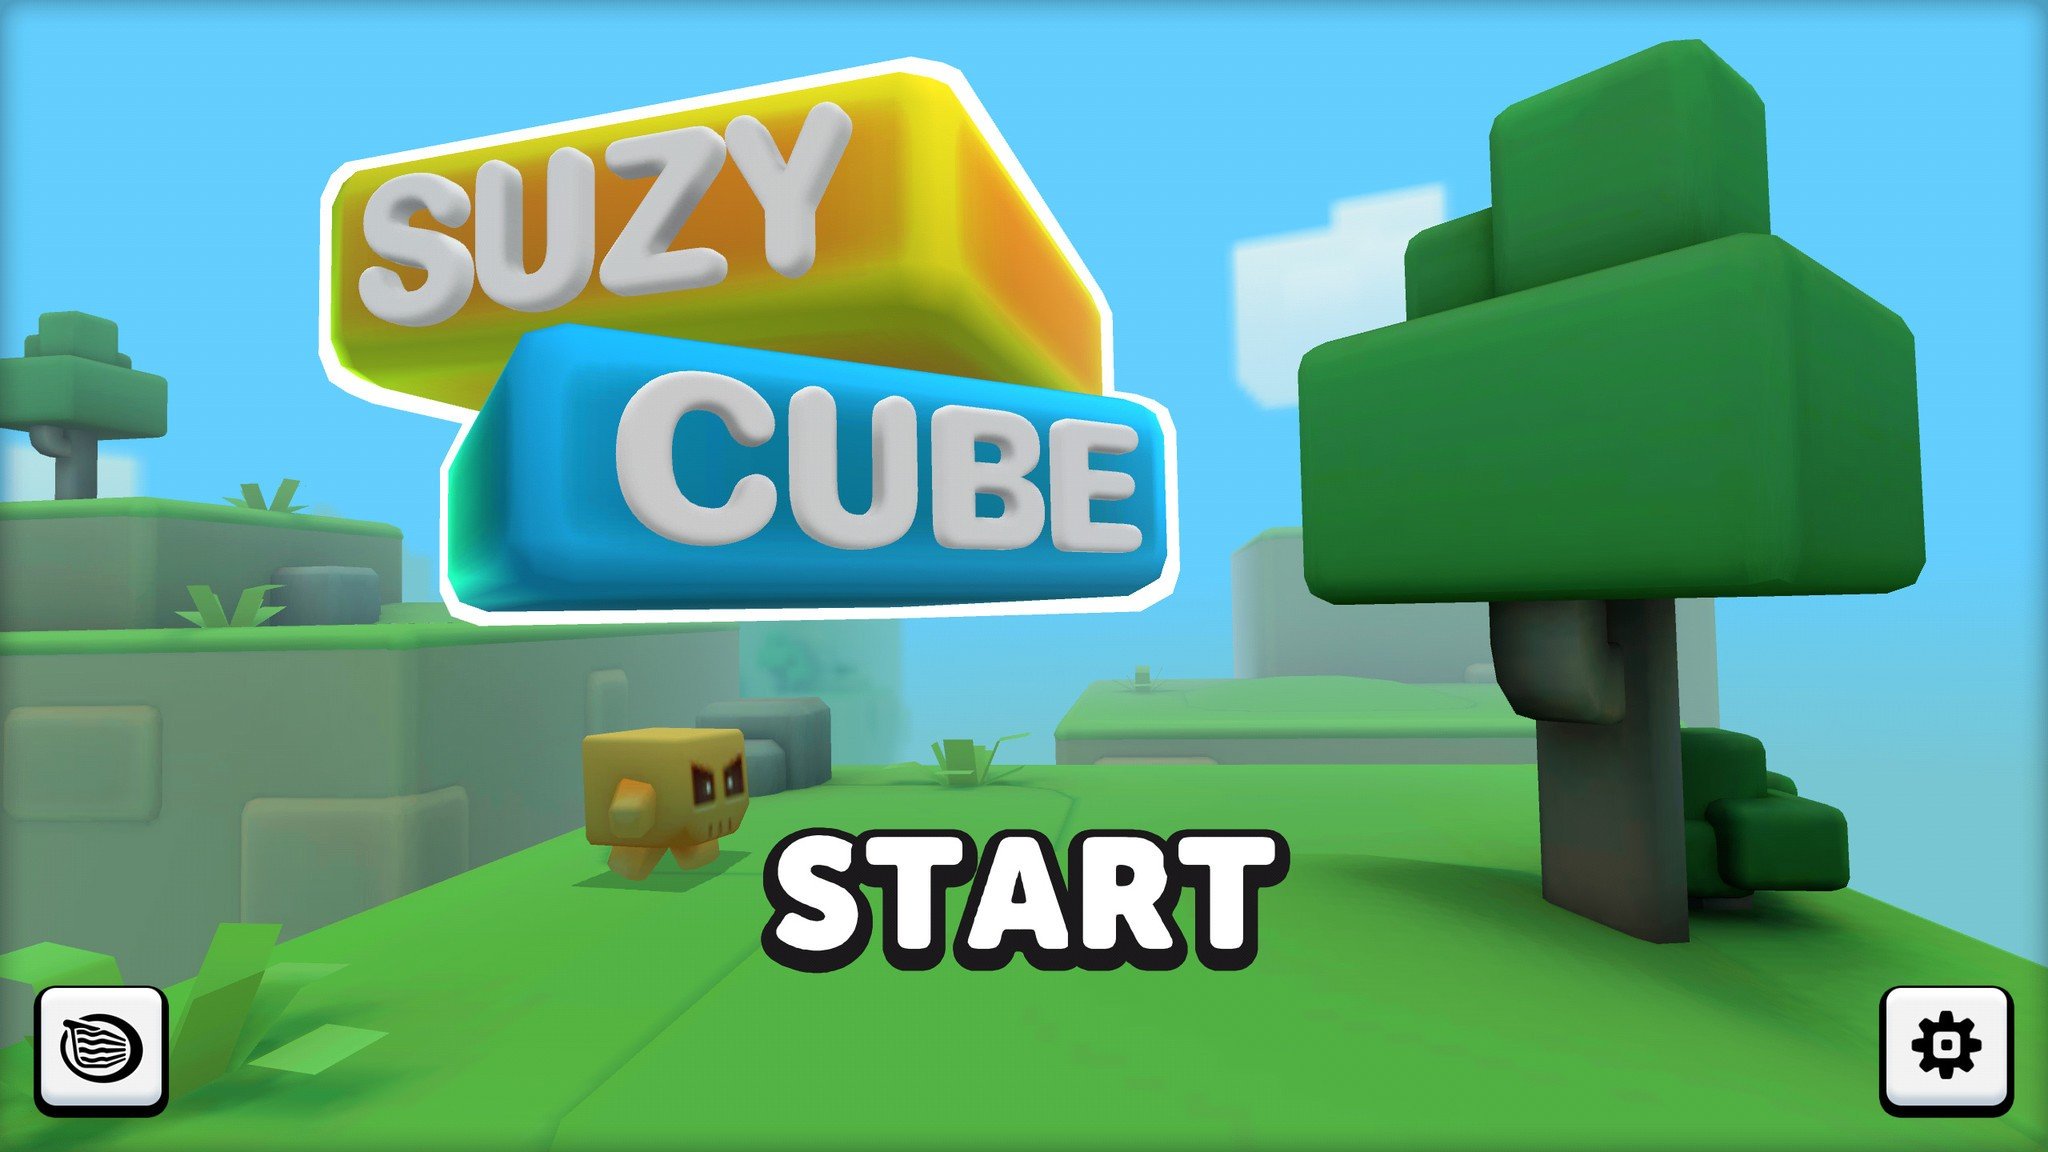 Suzy cube. Suzy Cube на андроид. Suzy Cube Art. Как играть Suzy Cube игры.